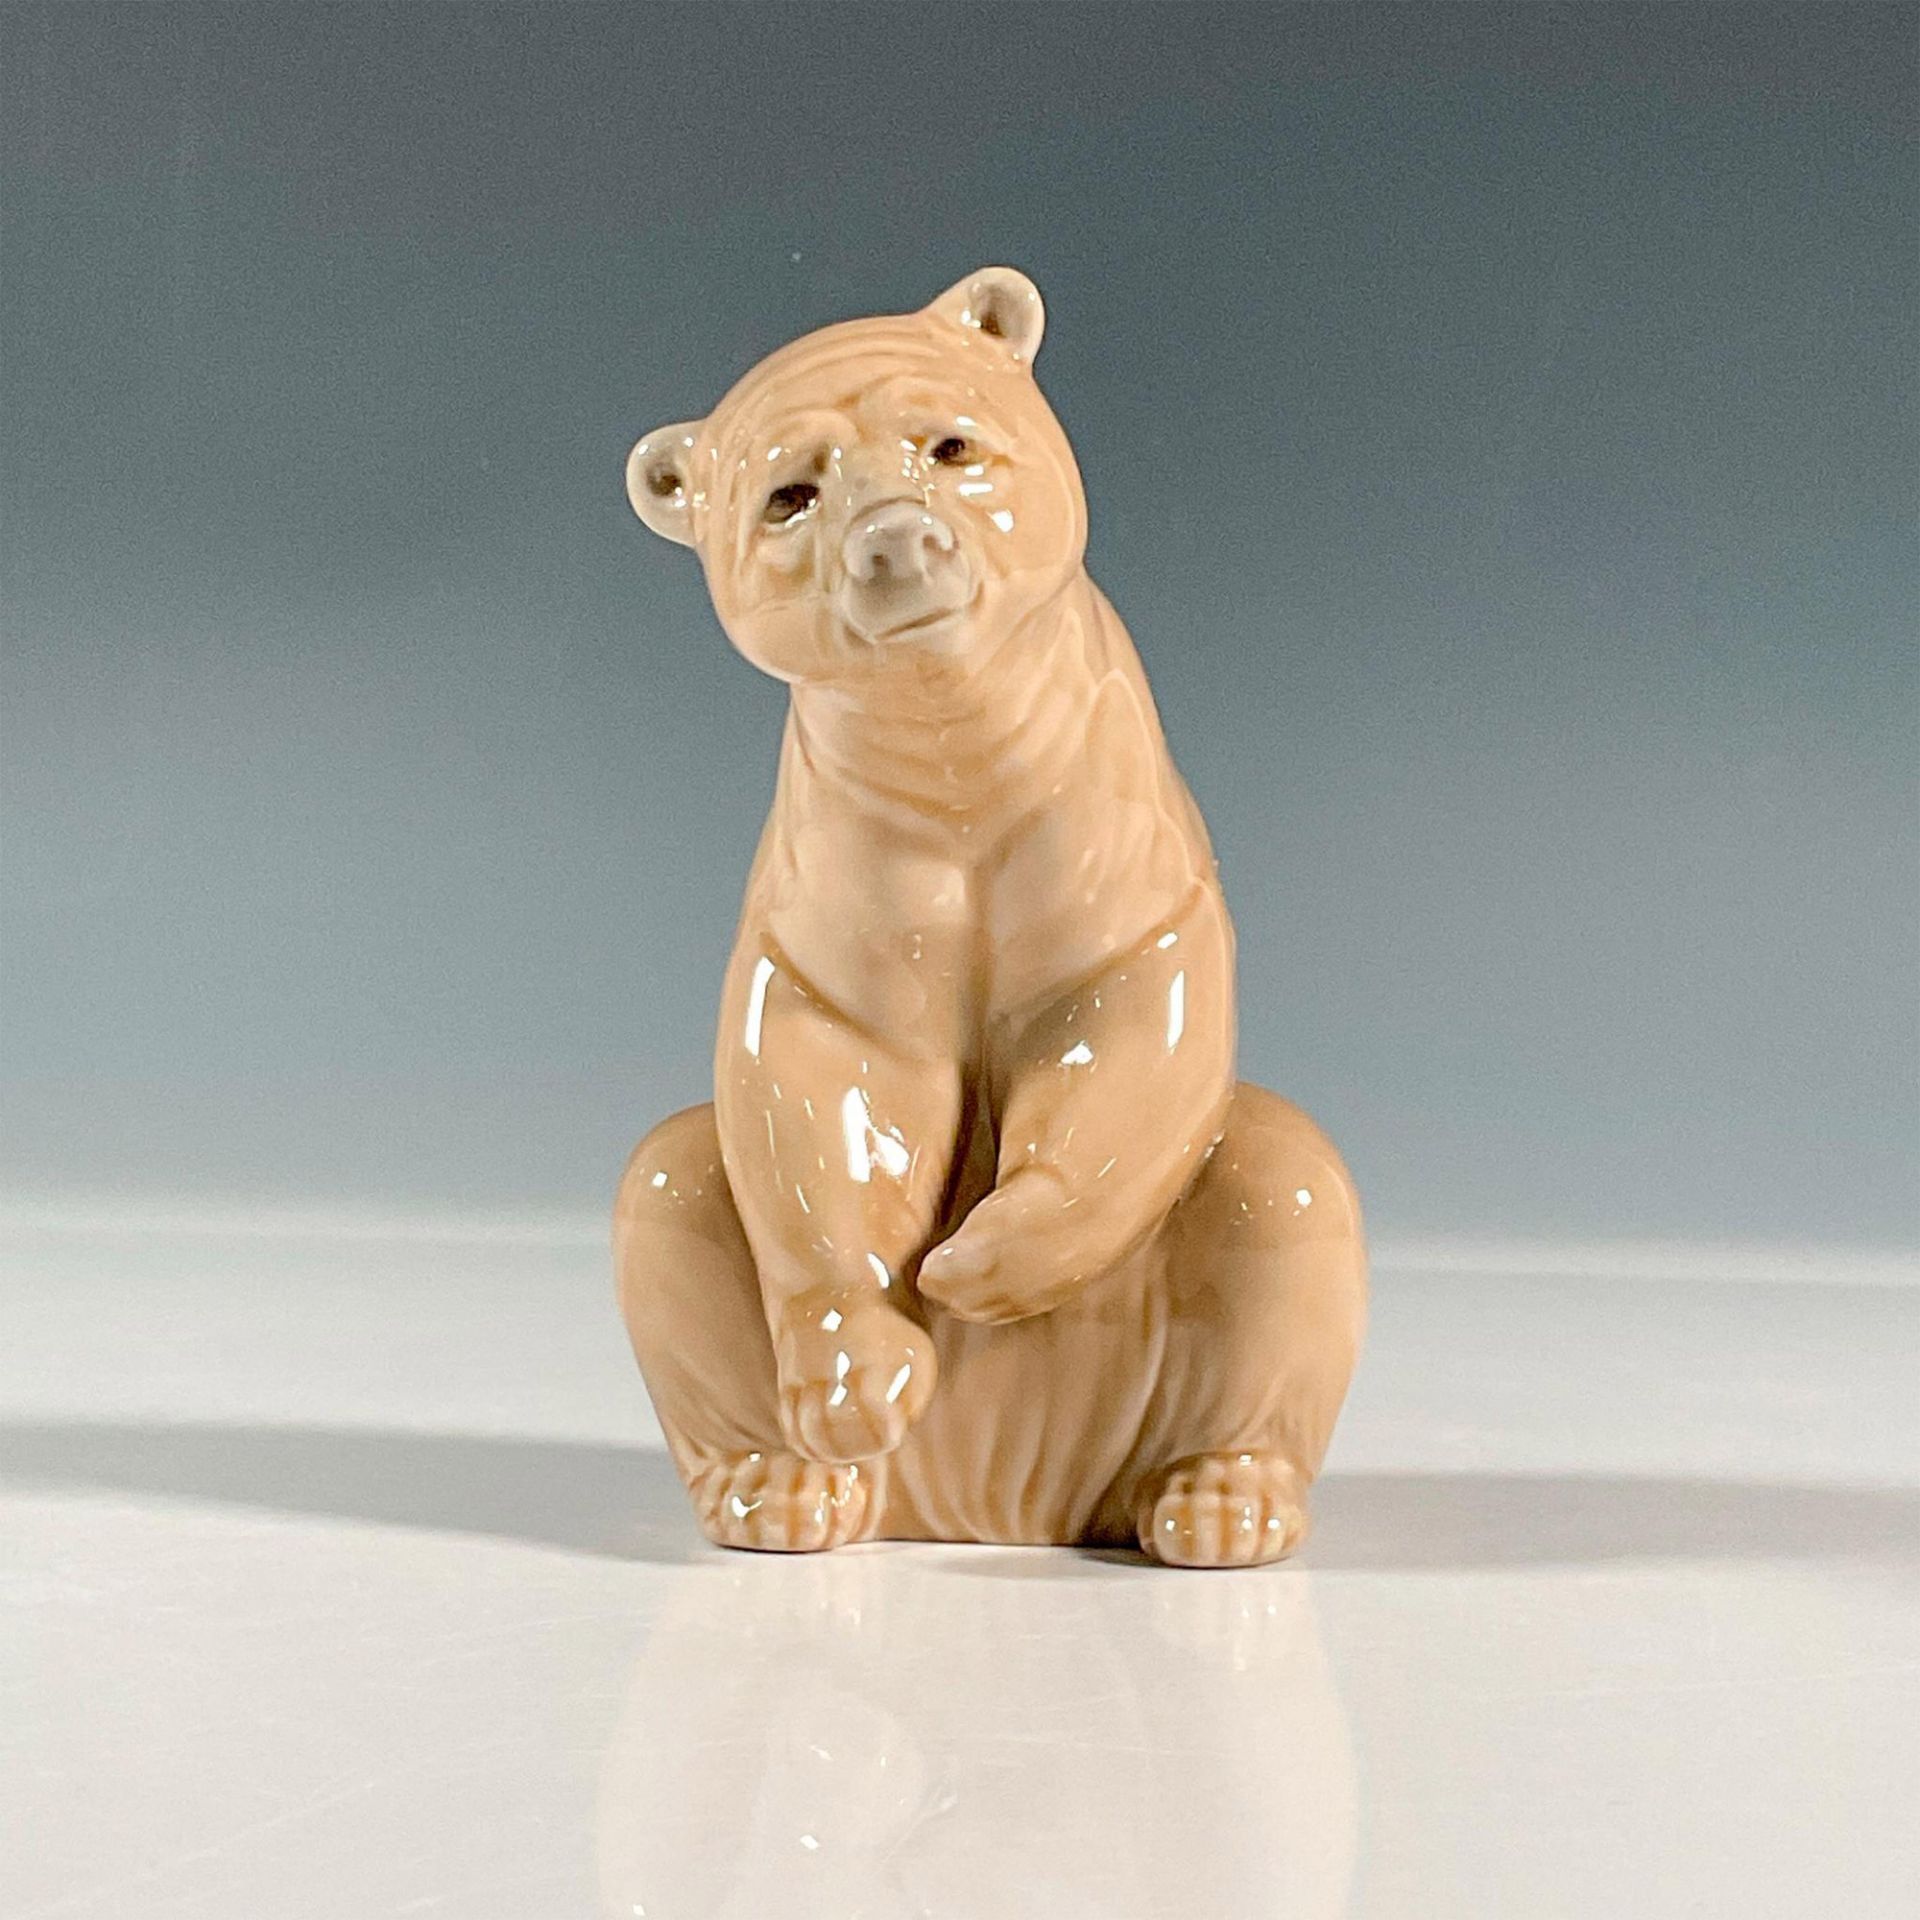 Good Bear 1001205 - Lladro Porcelain Figurine